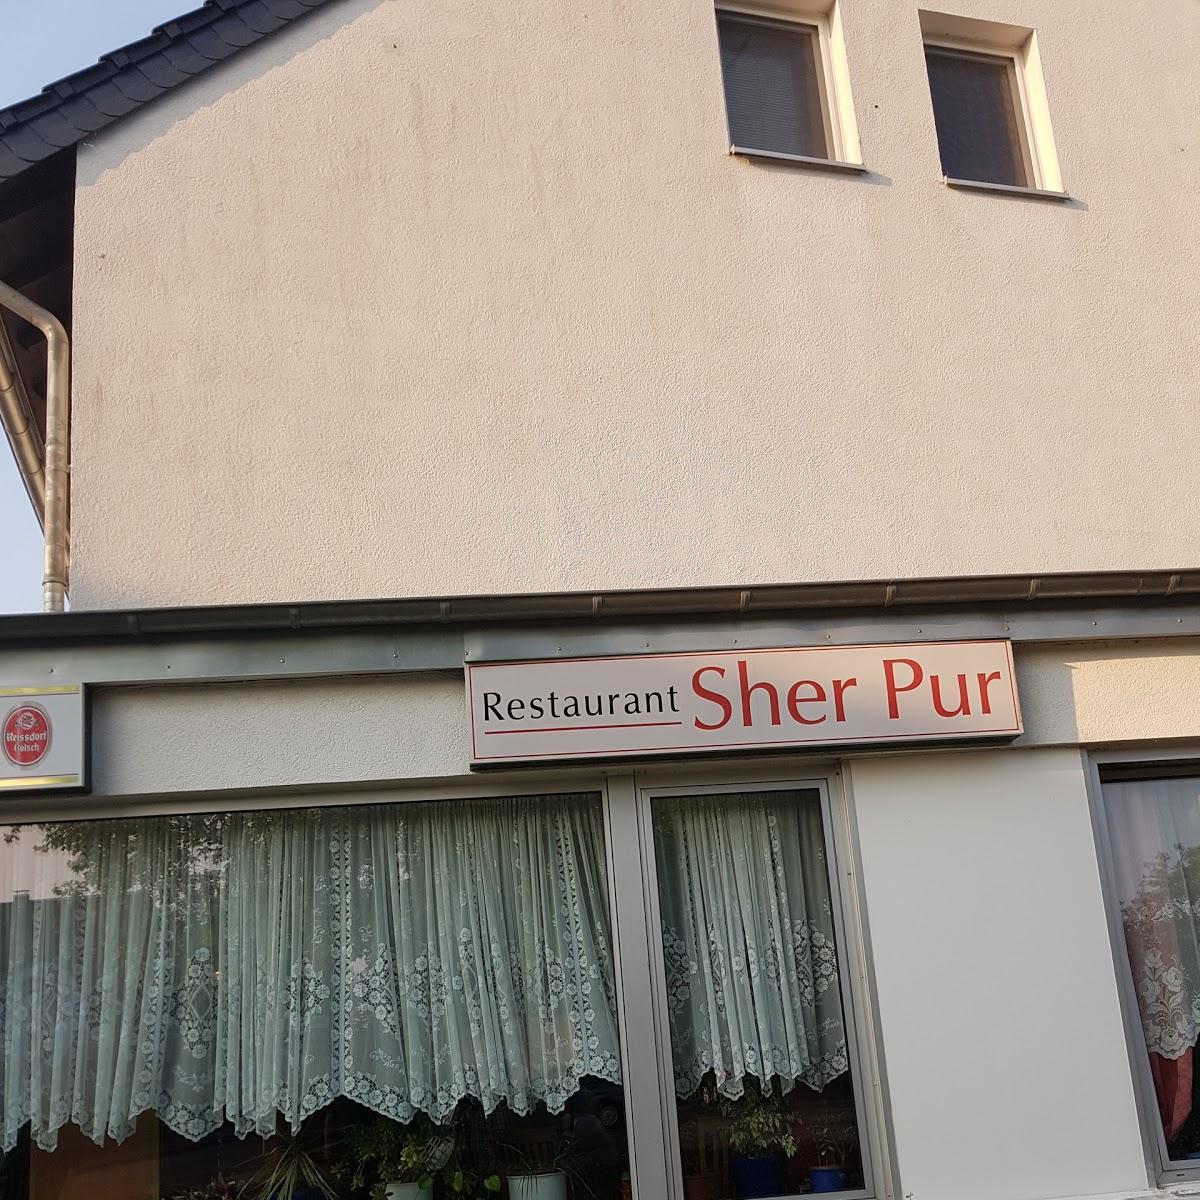 Restaurant "Sher Pur" in Bonn